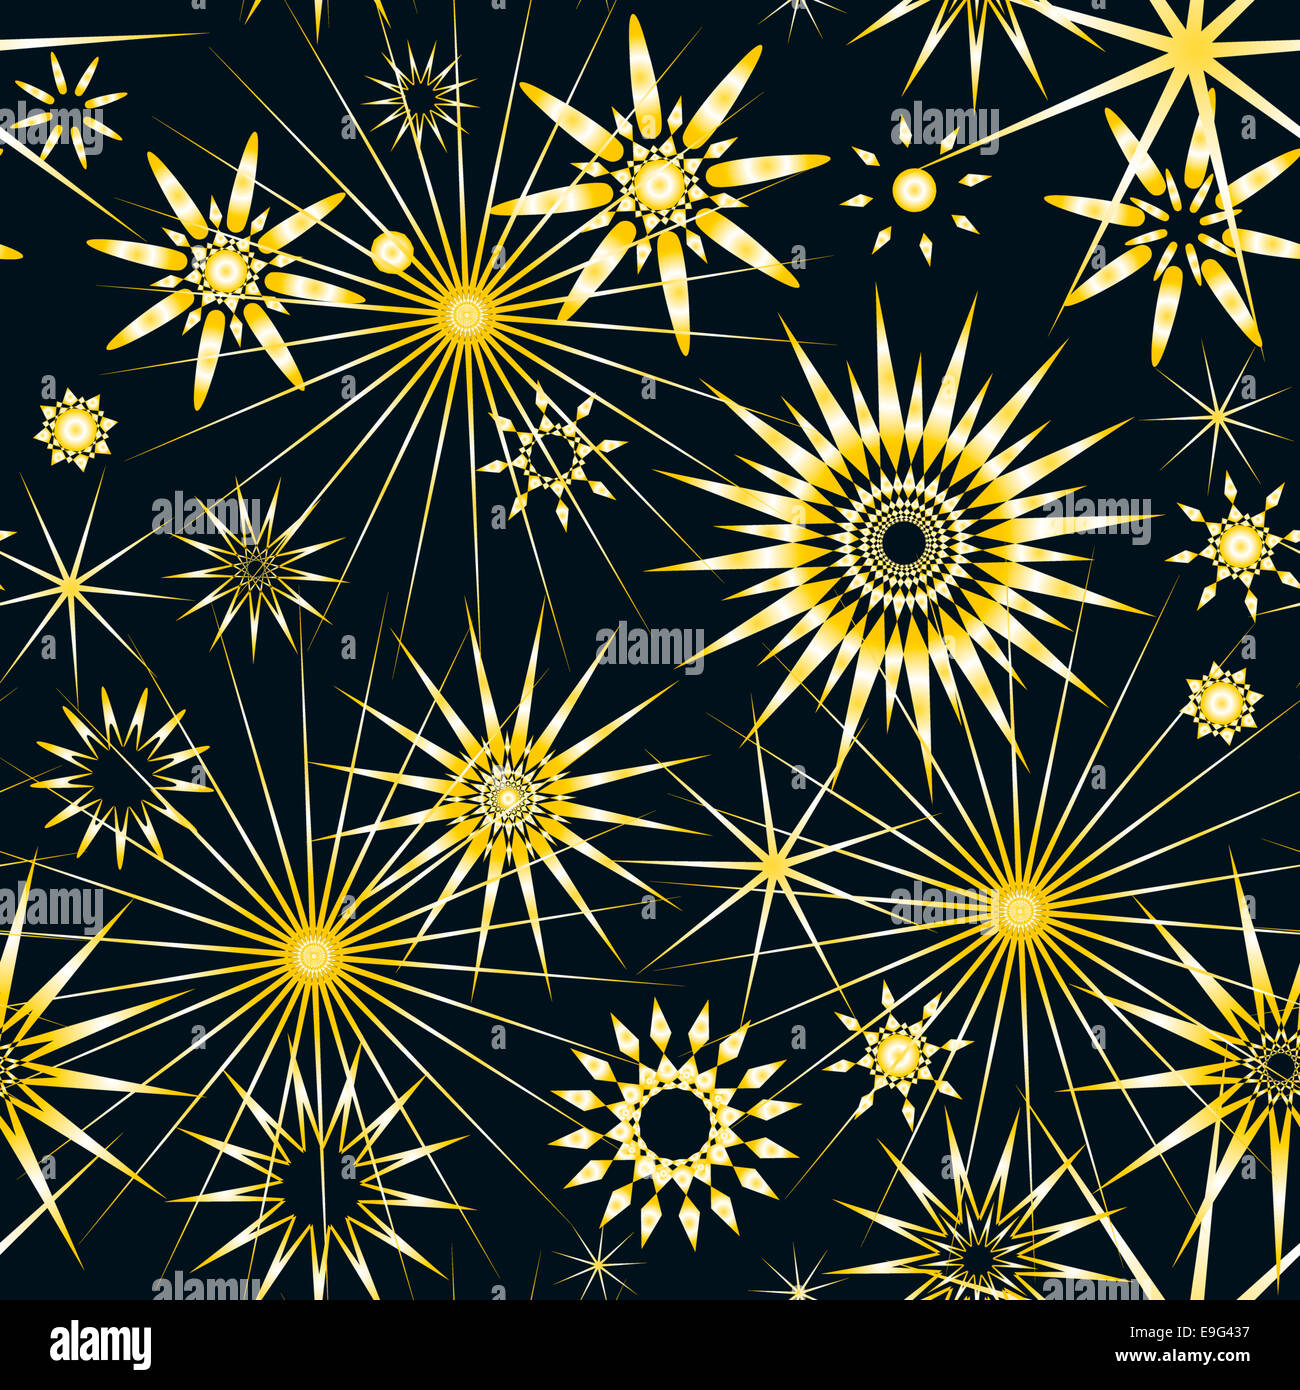 seamless pattern with stars Stock Photo